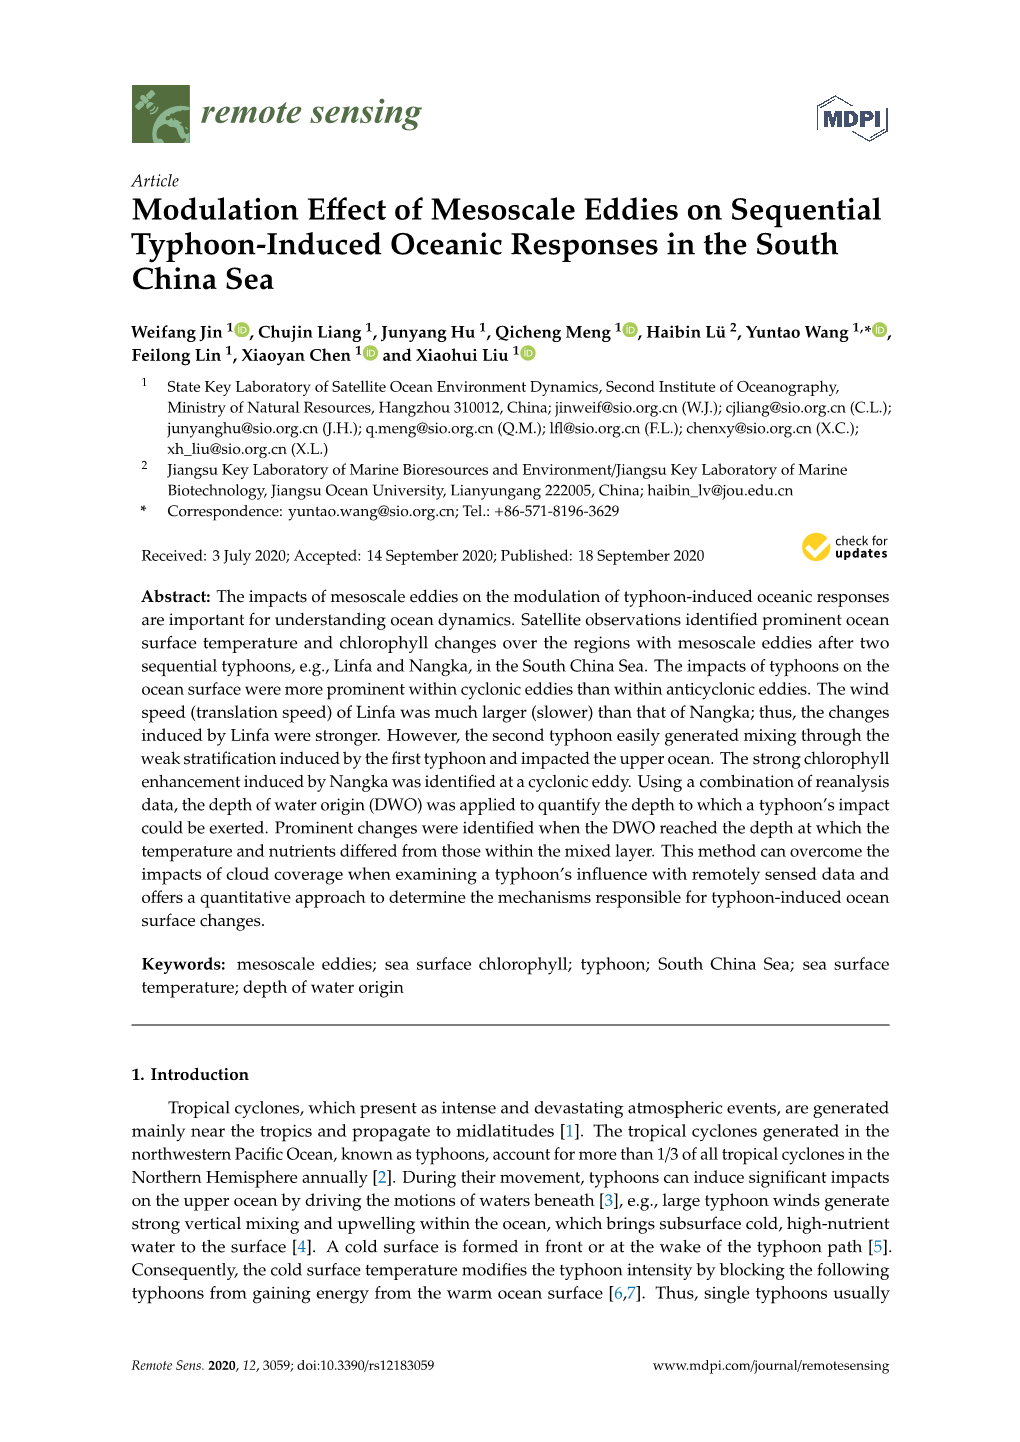 Modulation Effect of Mesoscale Eddies on Sequential Typhoon